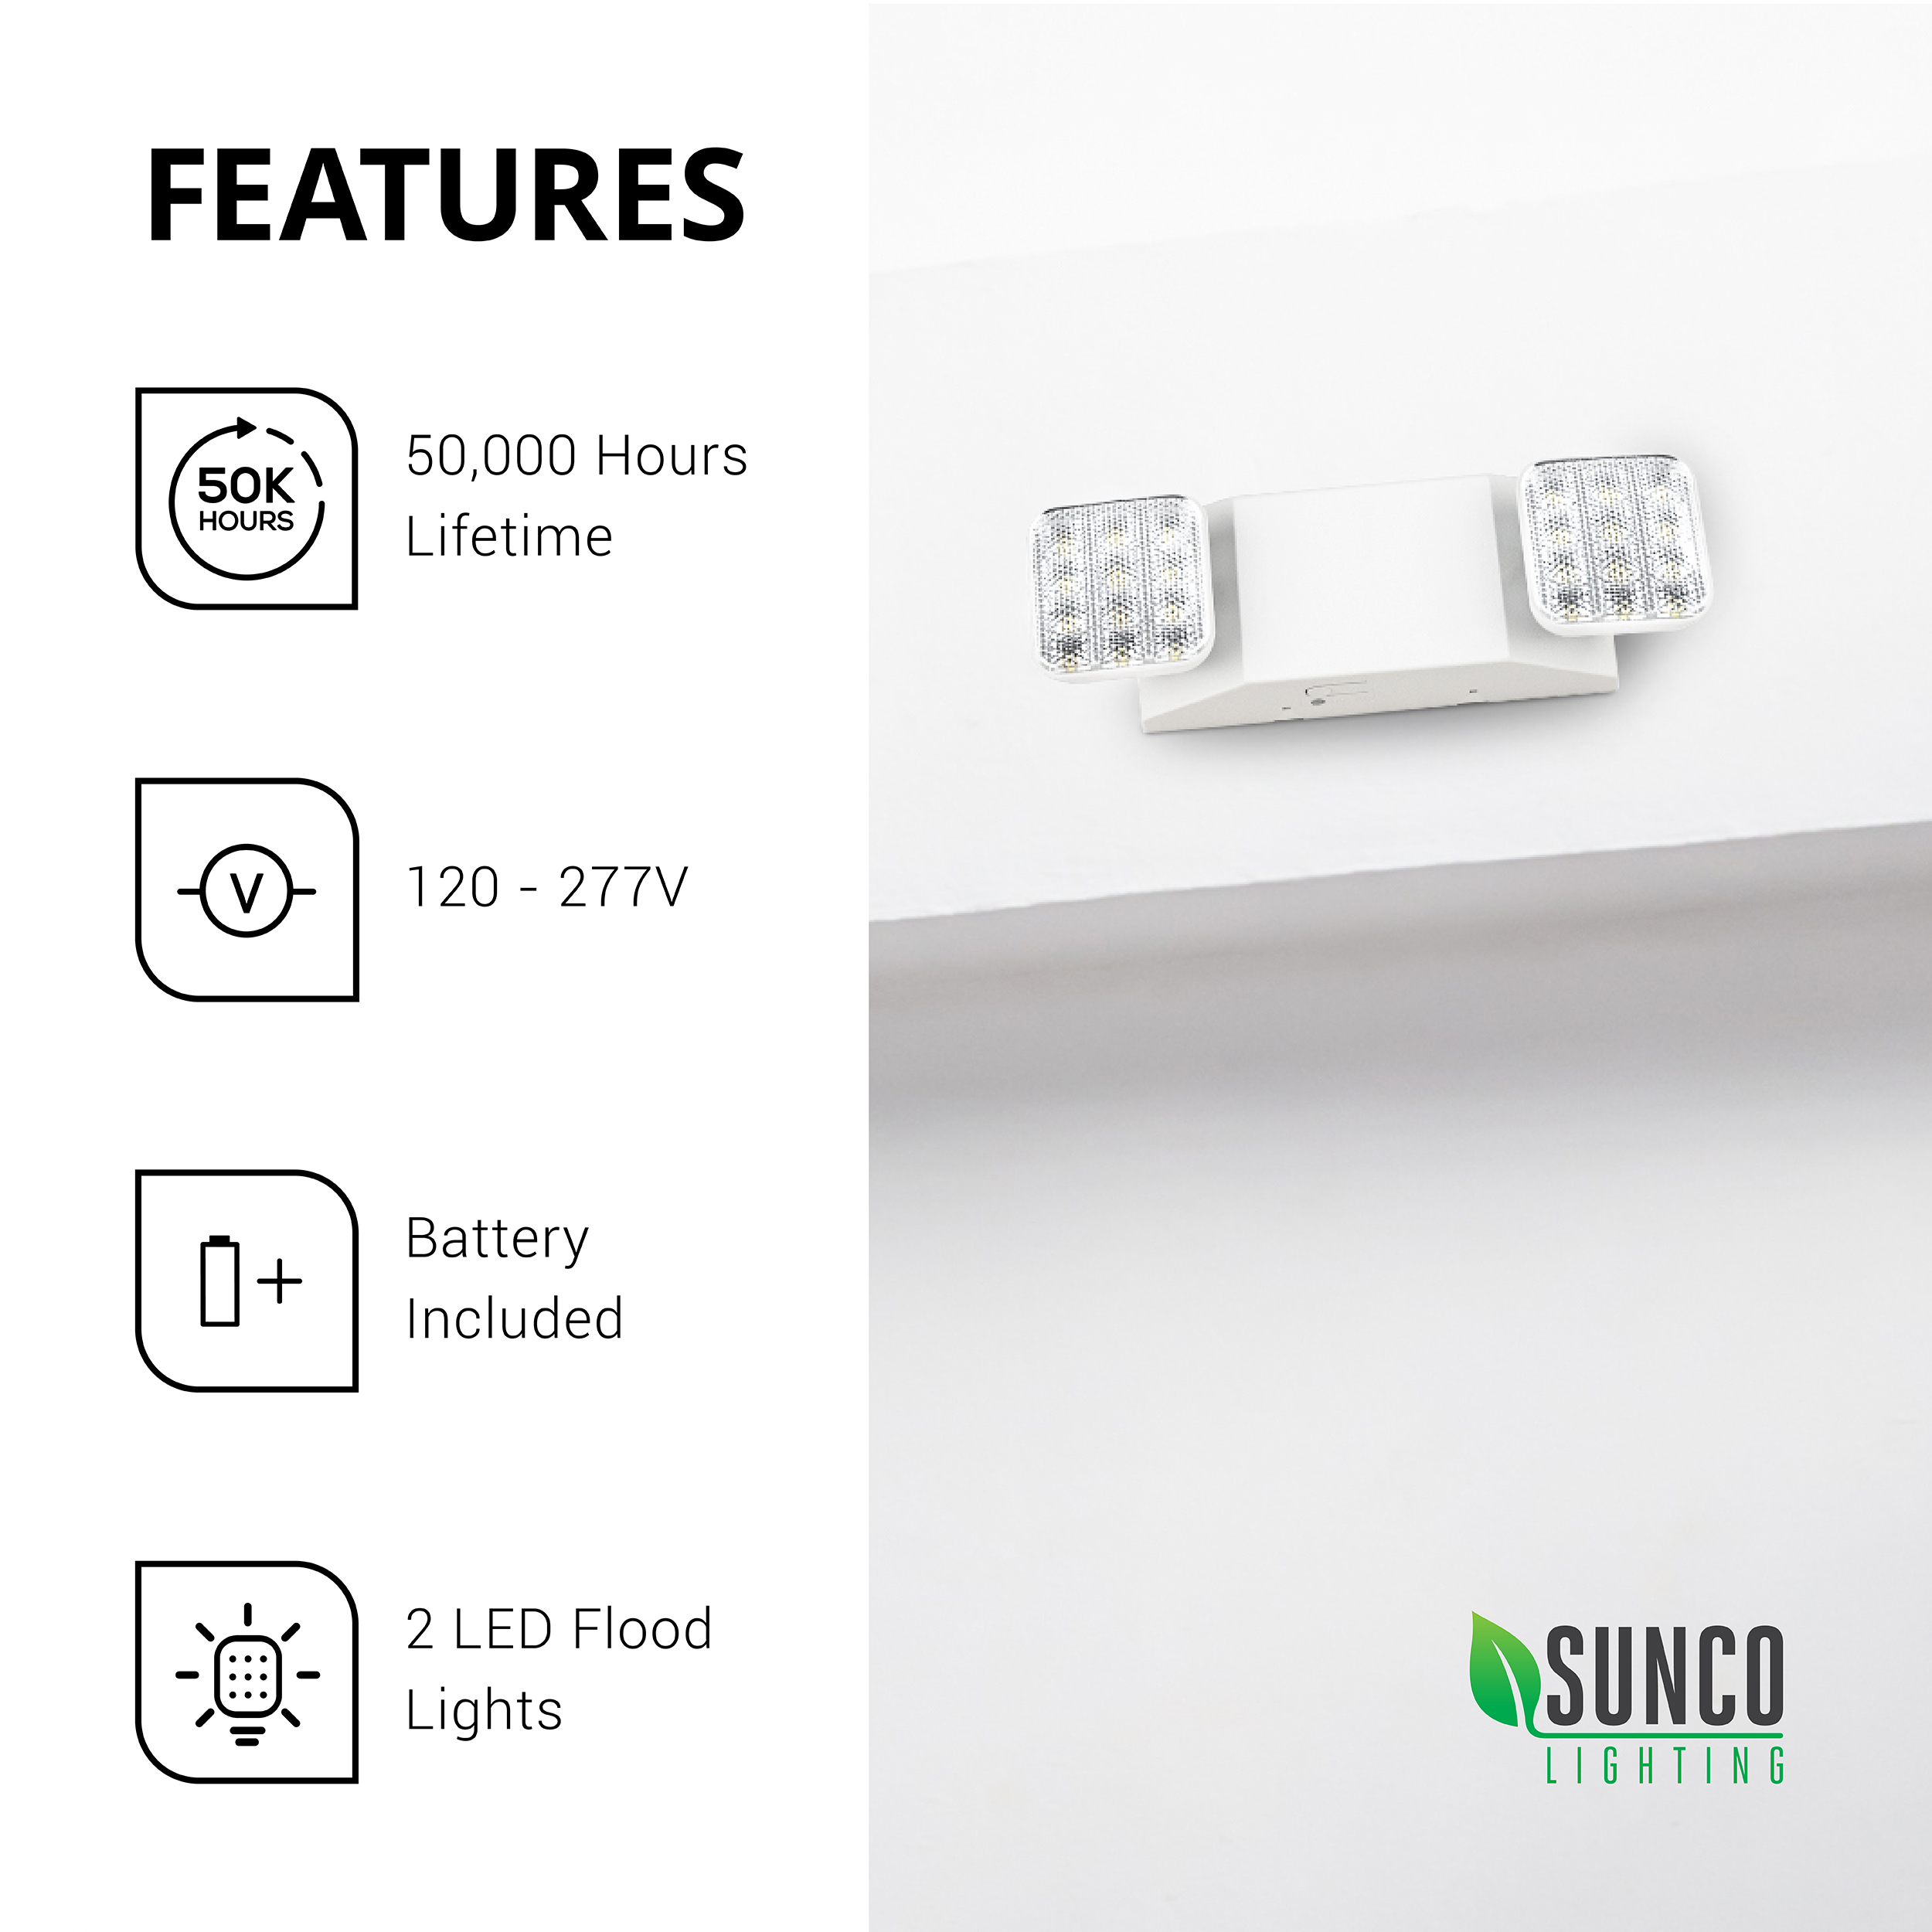 Sunco Lighting Pack LED Emergency Light Fixture, Two LED Flood Lights,  Backup Battery (180 Minutes), Wall Mount, Commercial Grade, 120-277V, Fire  Resistant (UL 94V-0)